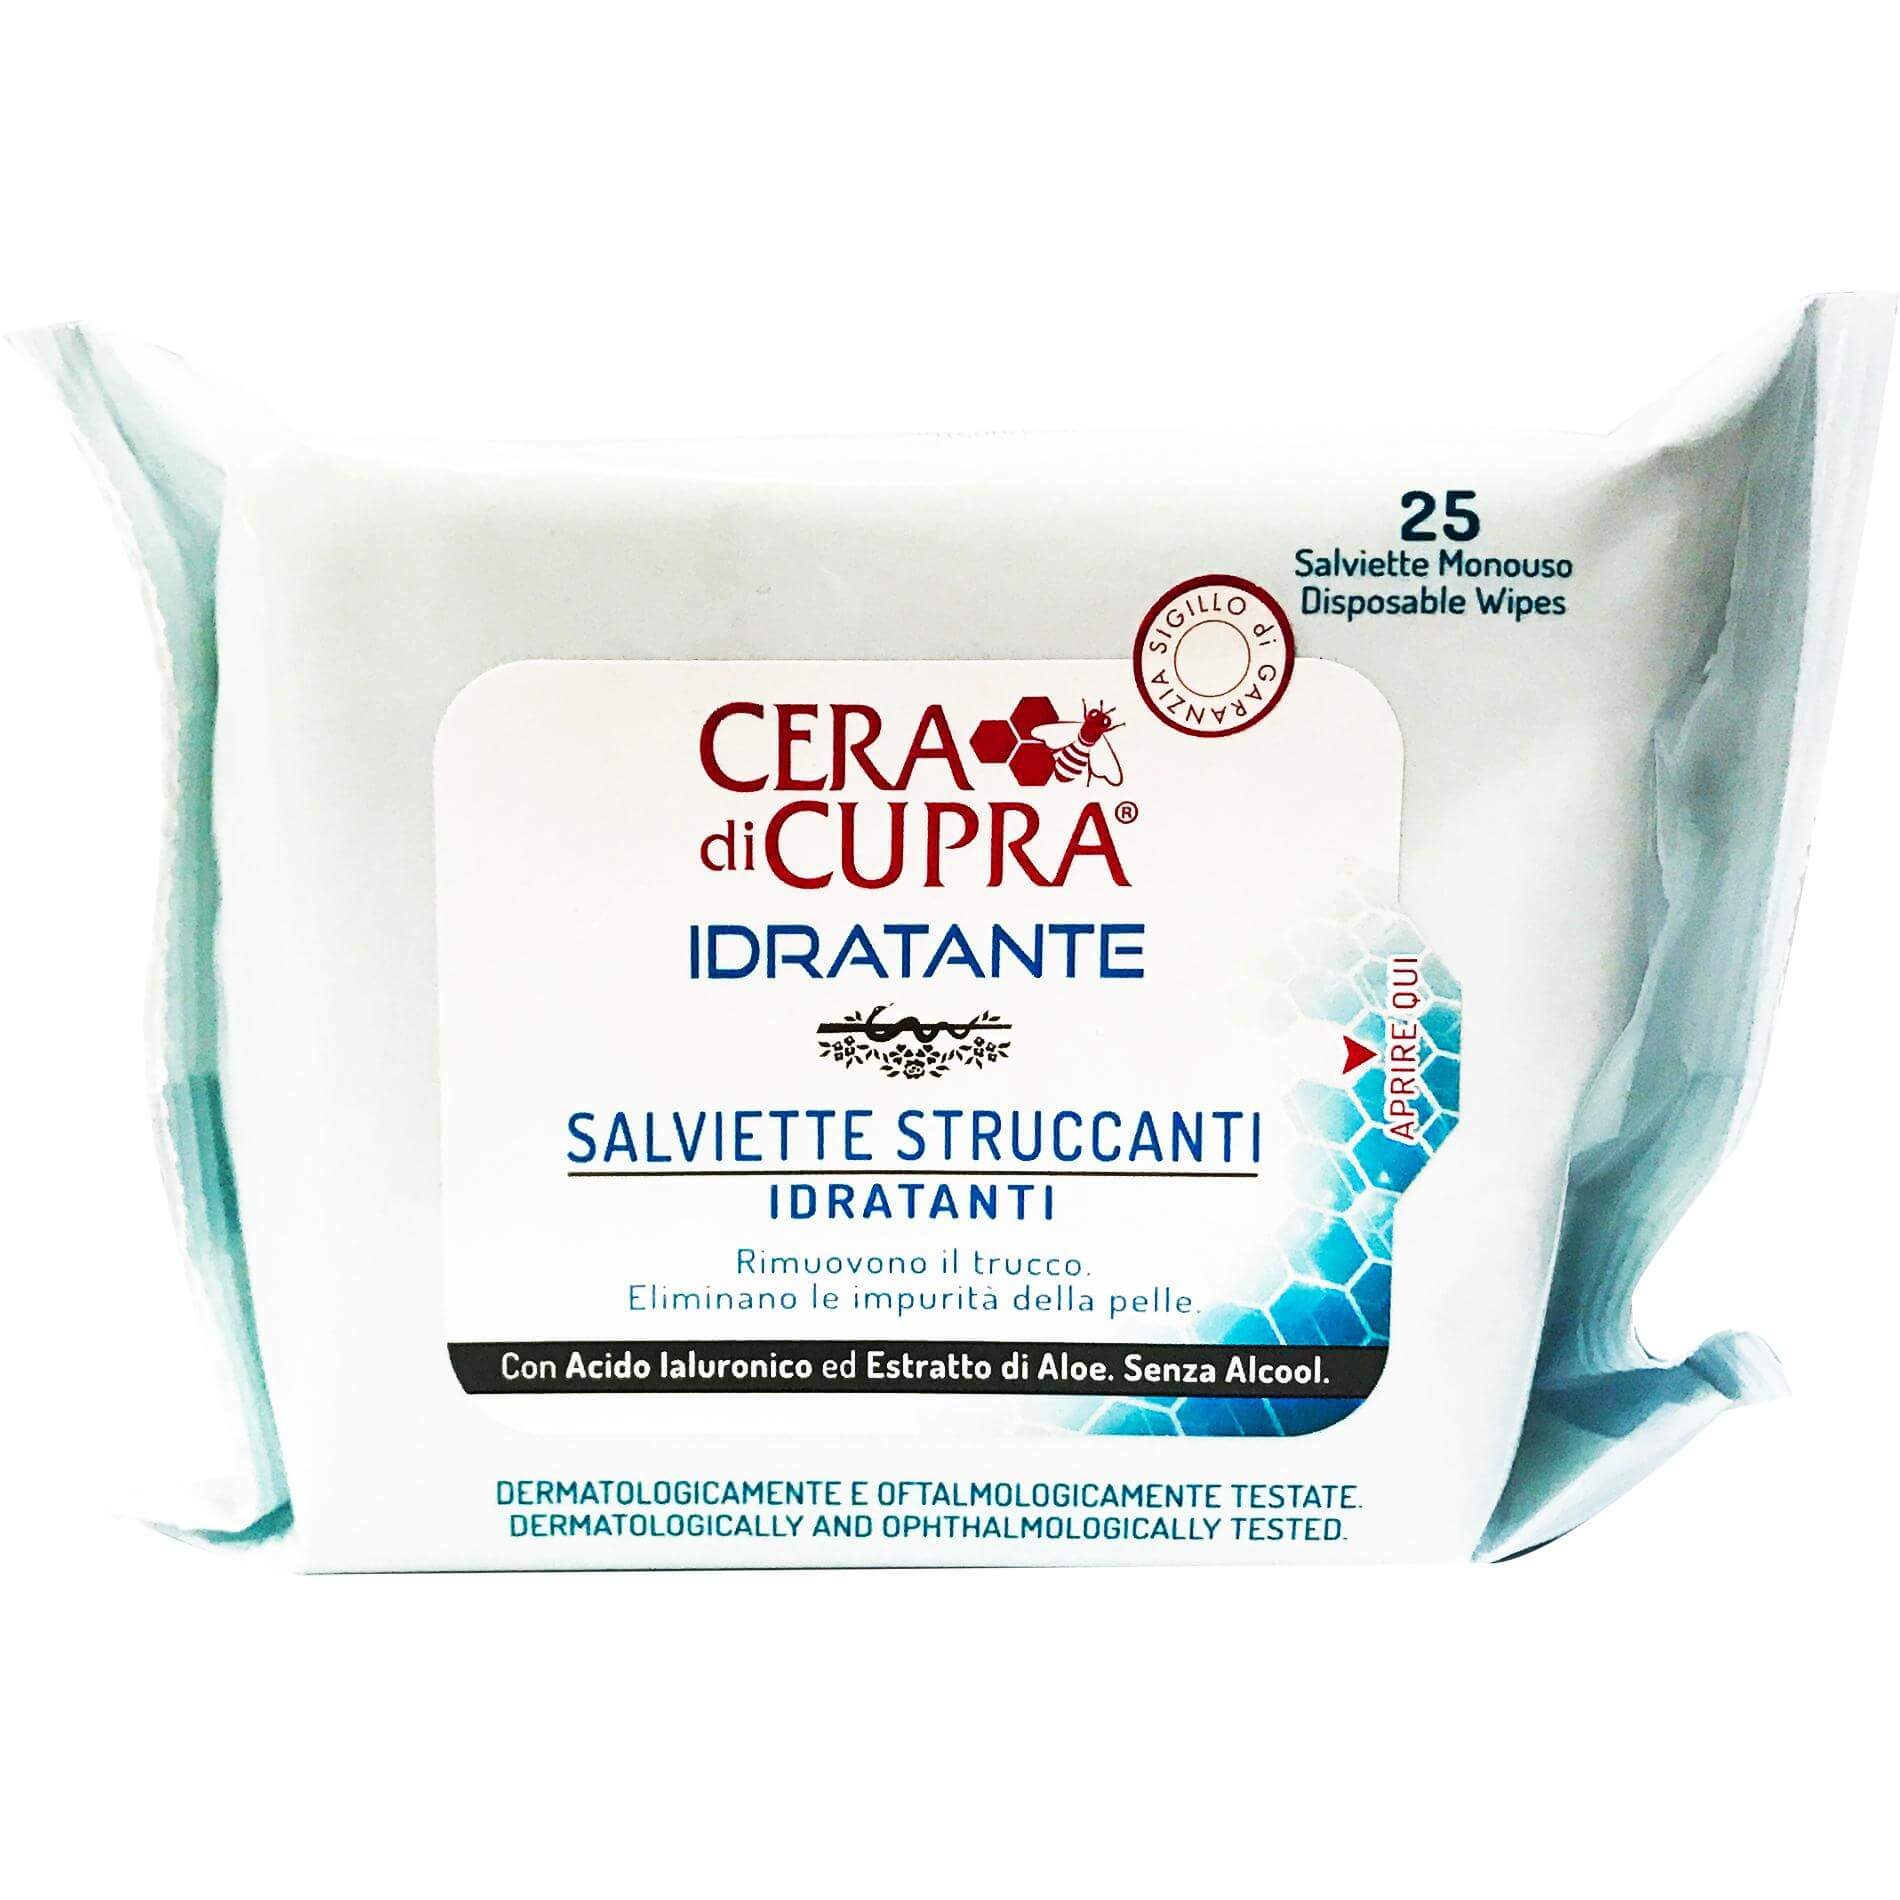 Cera di Cupra Idratante Μαντηλάκια Ντεμακιγιάζ με Εκχύλισμα Αλόη Βέρα & Υαλουρονικό Οξύ 25 Τεμάχια